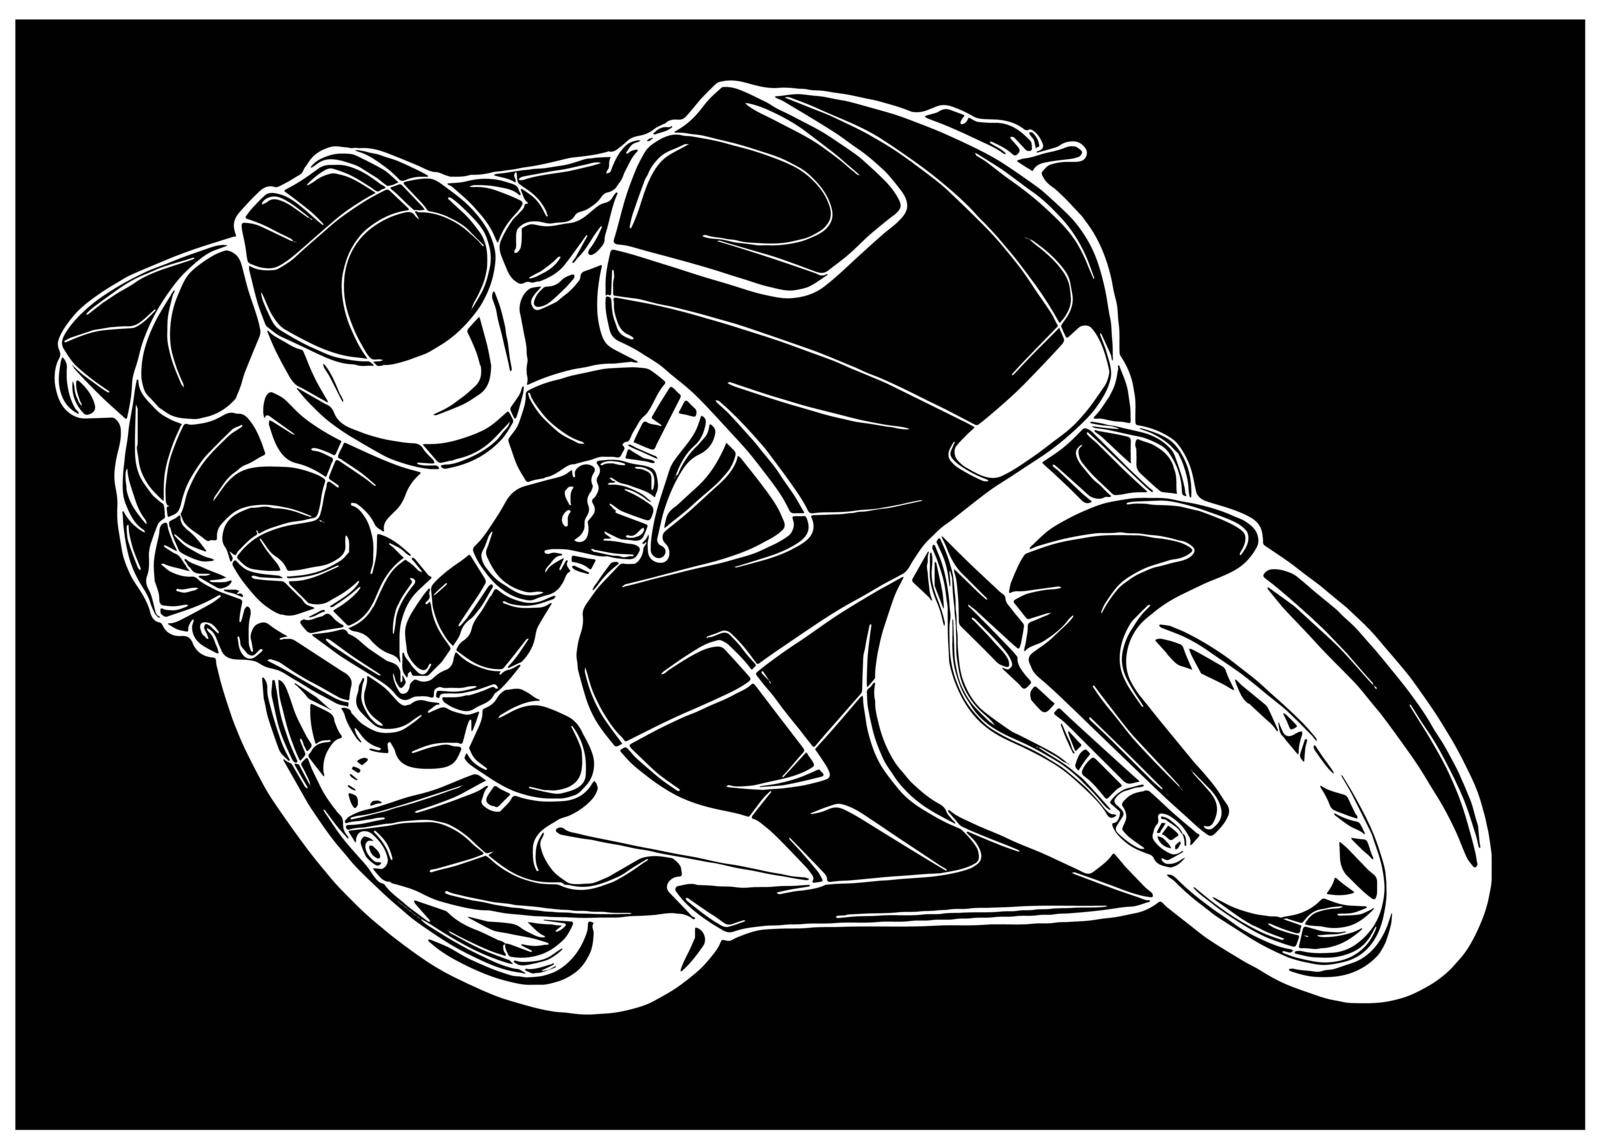 Motorcycle racer sport vector illustration